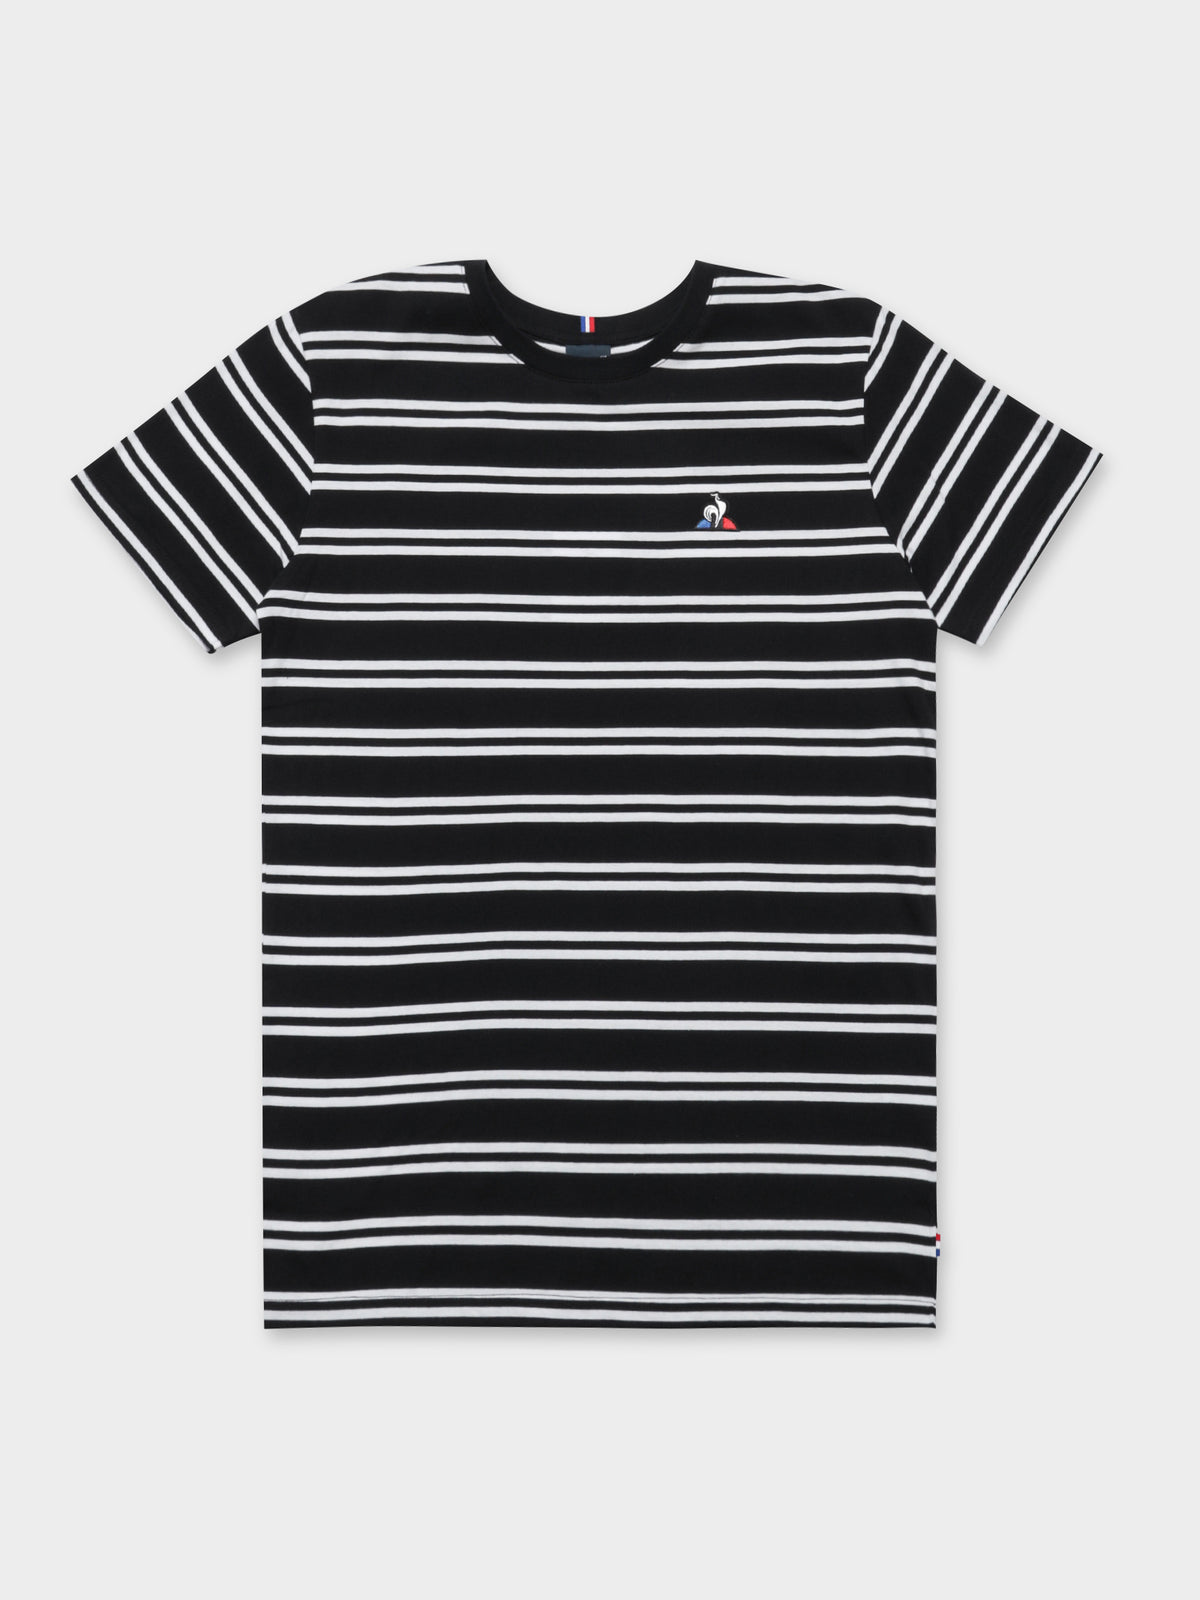 Essential Stripe T-Shirt in Black